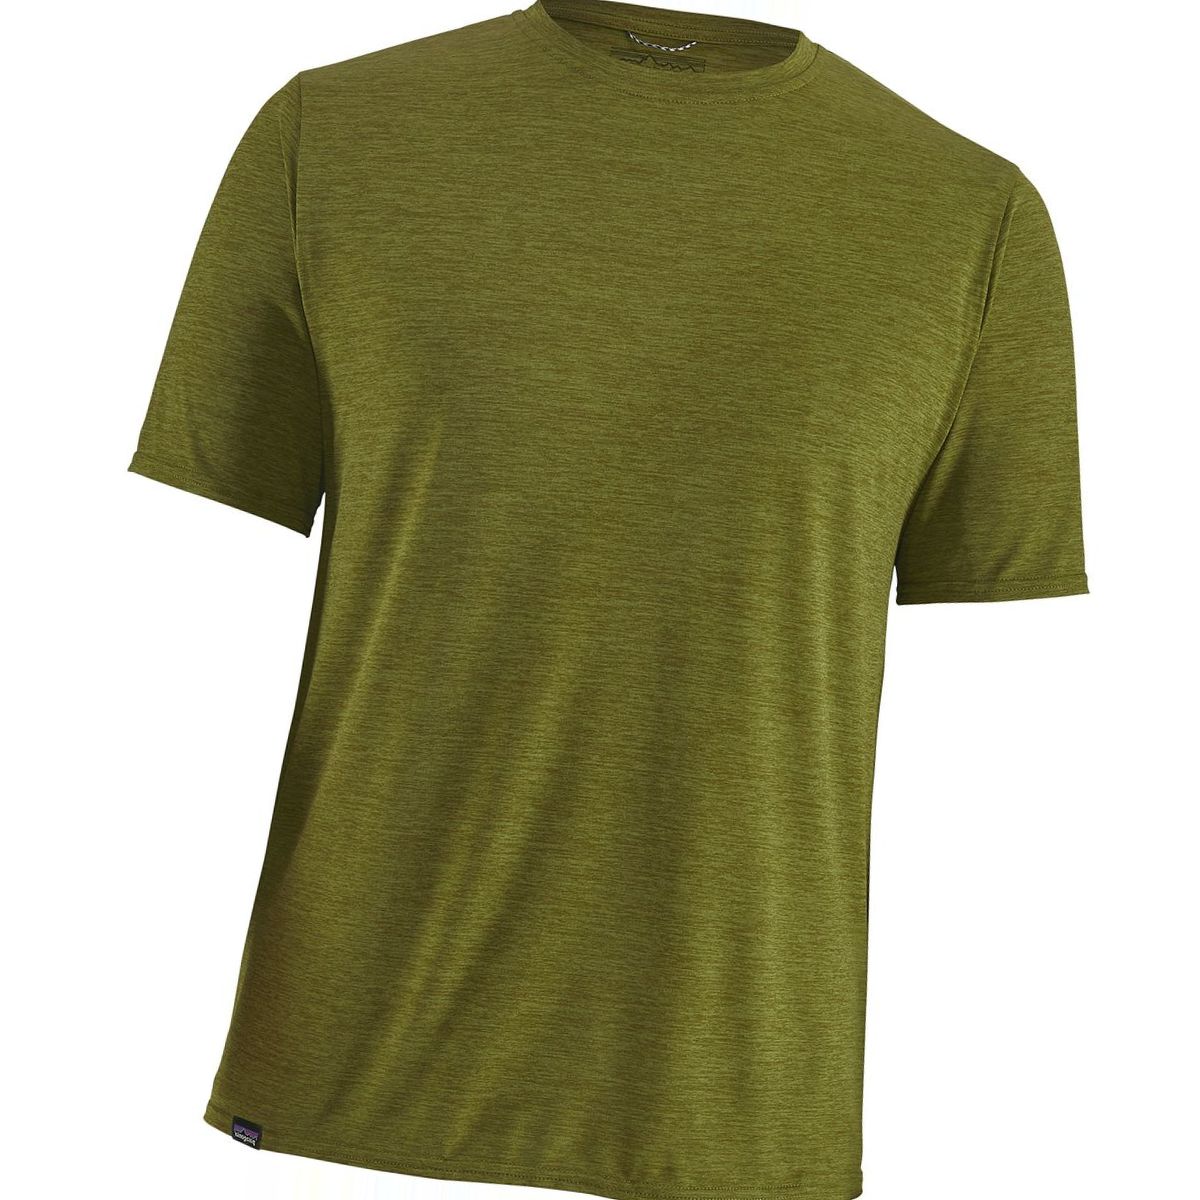 Patagonia Capilene Cool Daily Short-Sleeve Shirt - Men's